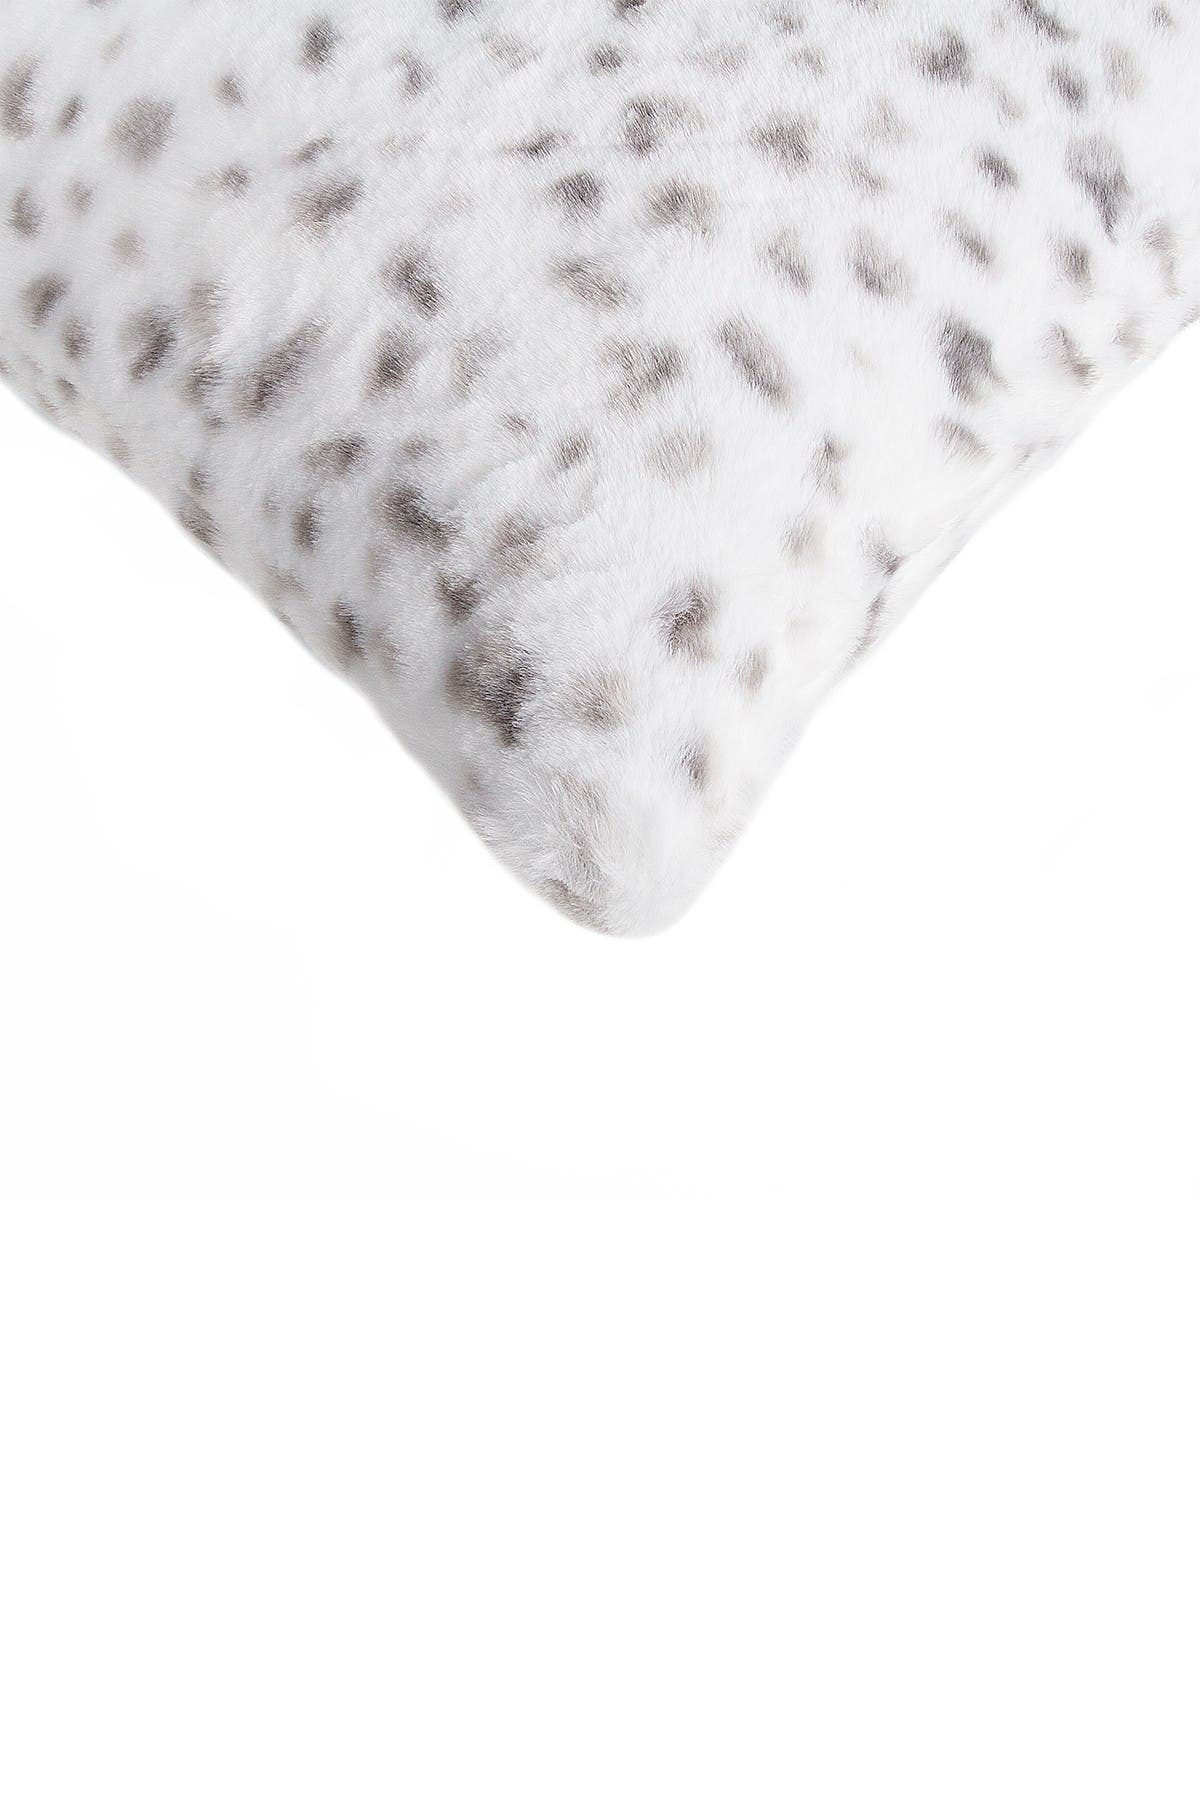 Luxe Belton Snow Leopard Faux Fur 2-pack Pillows In Open Miscellaneous